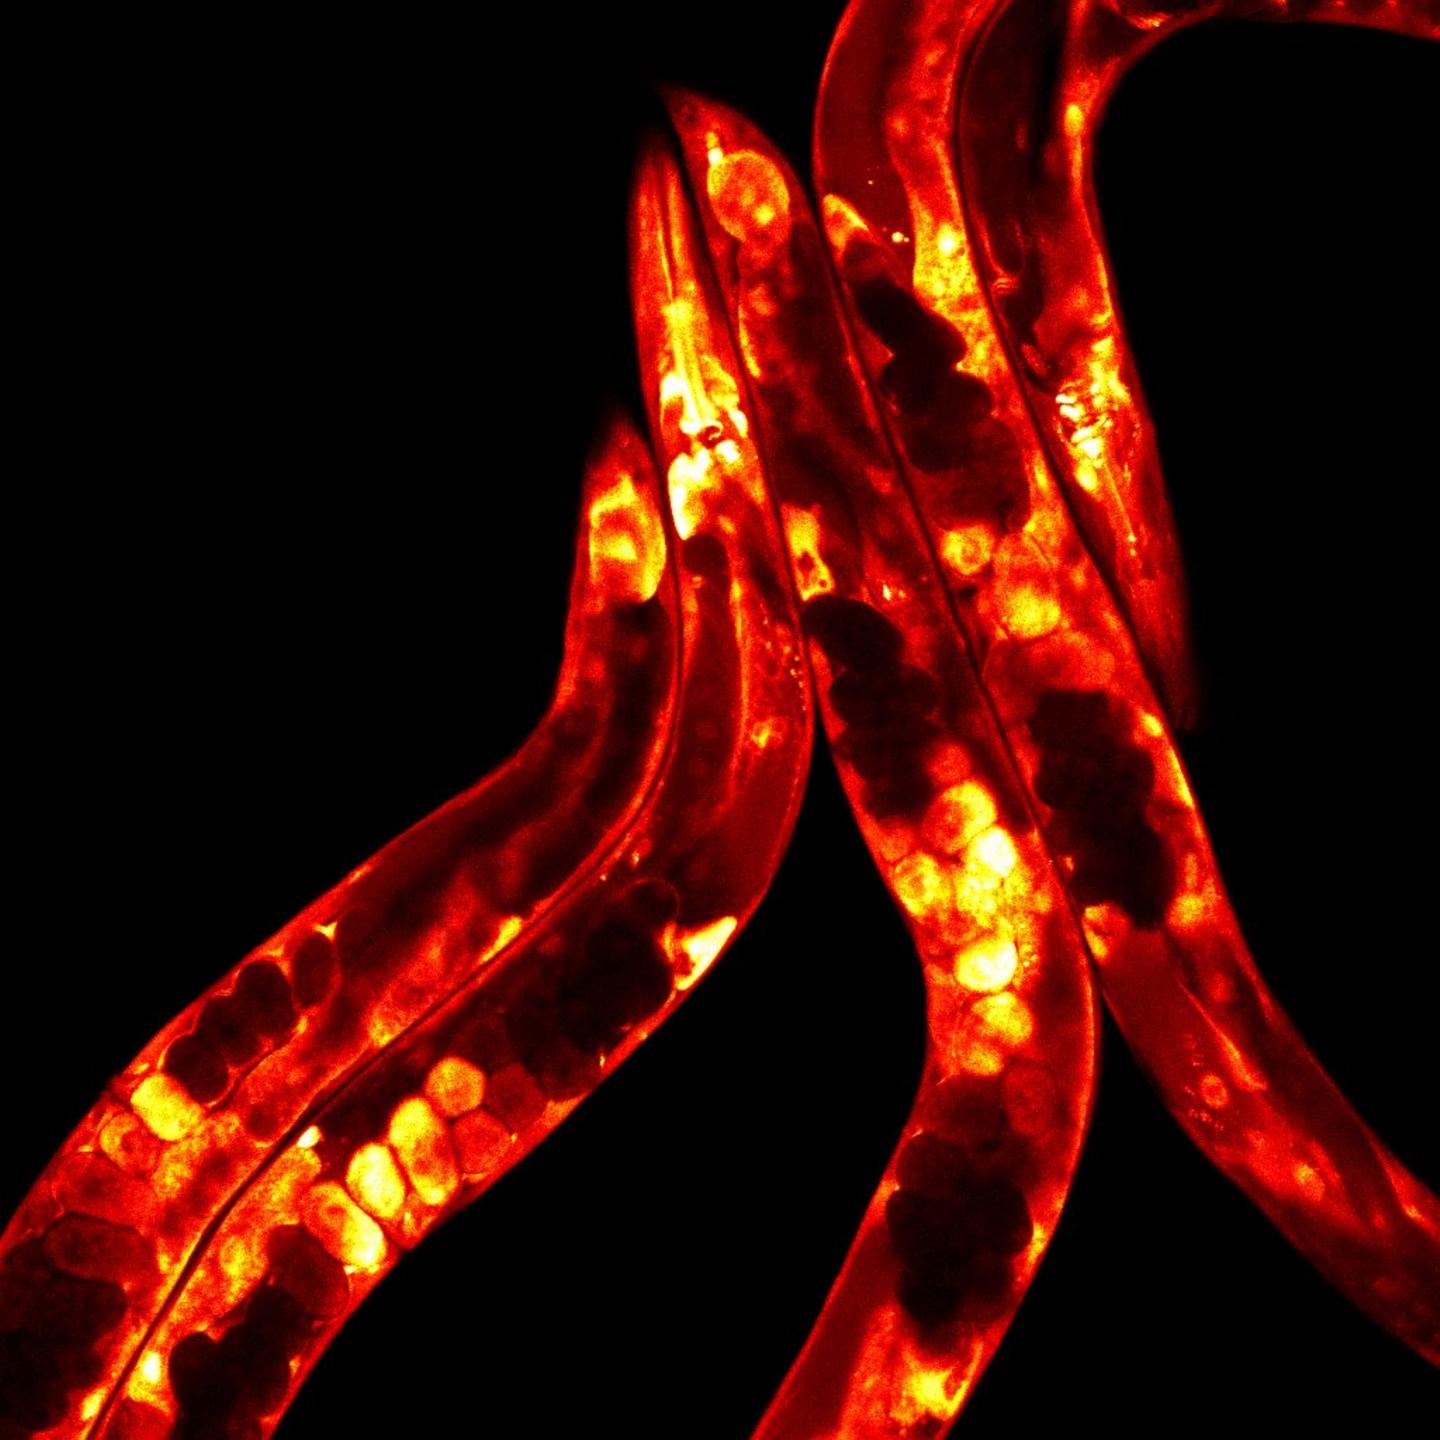 Fluorescent <em>C. elegans</em> Worms